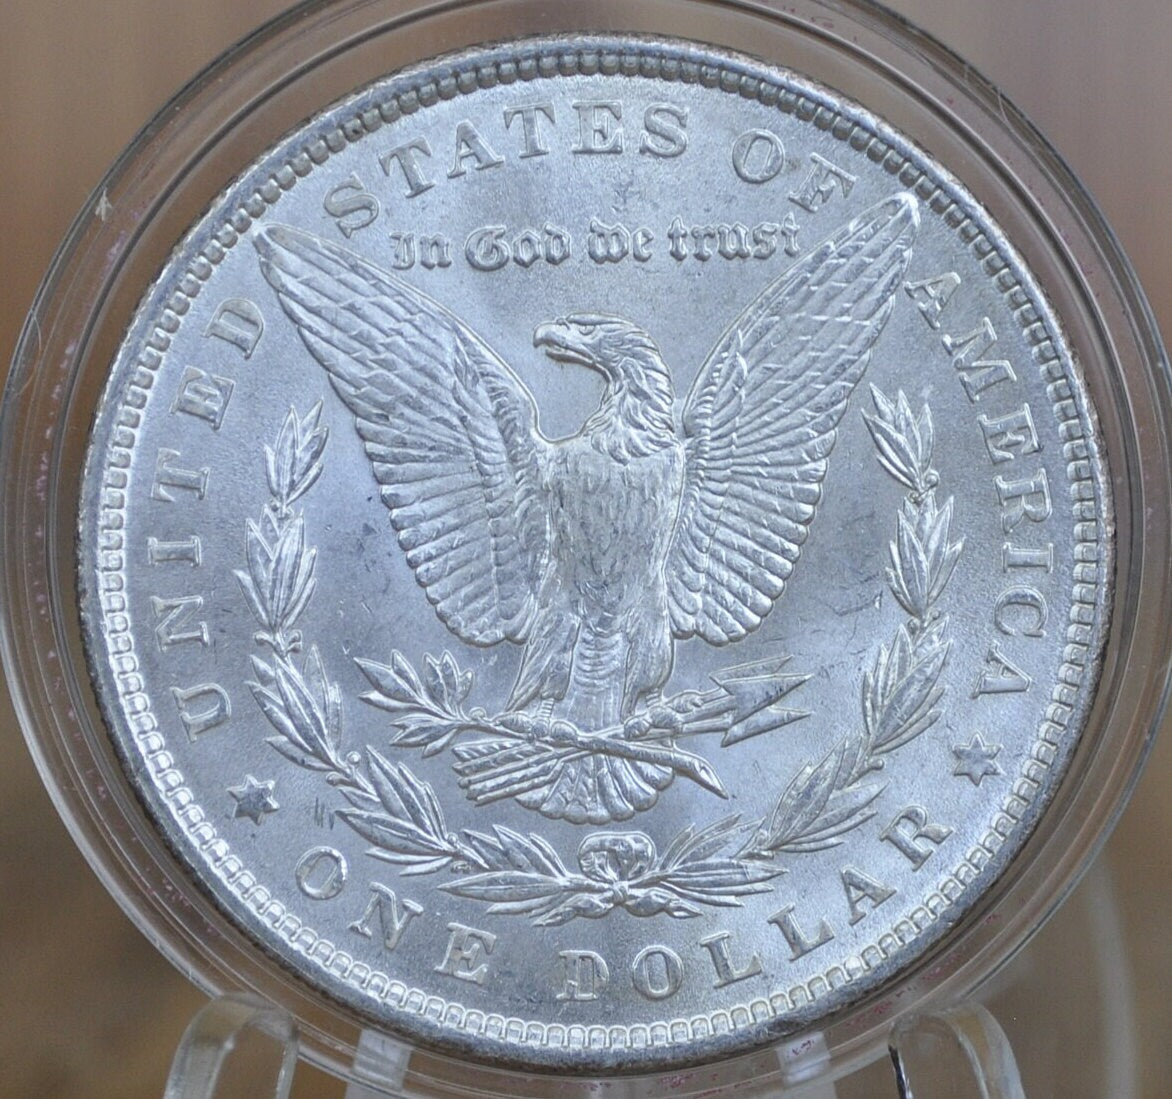 1900 Morgan Silver Dollar - XF-BU (Extremely Fine to Uncirculated), Choose by Grade - Philadelphia Mint - 1900 P Morgan Dollar 1900 Silver